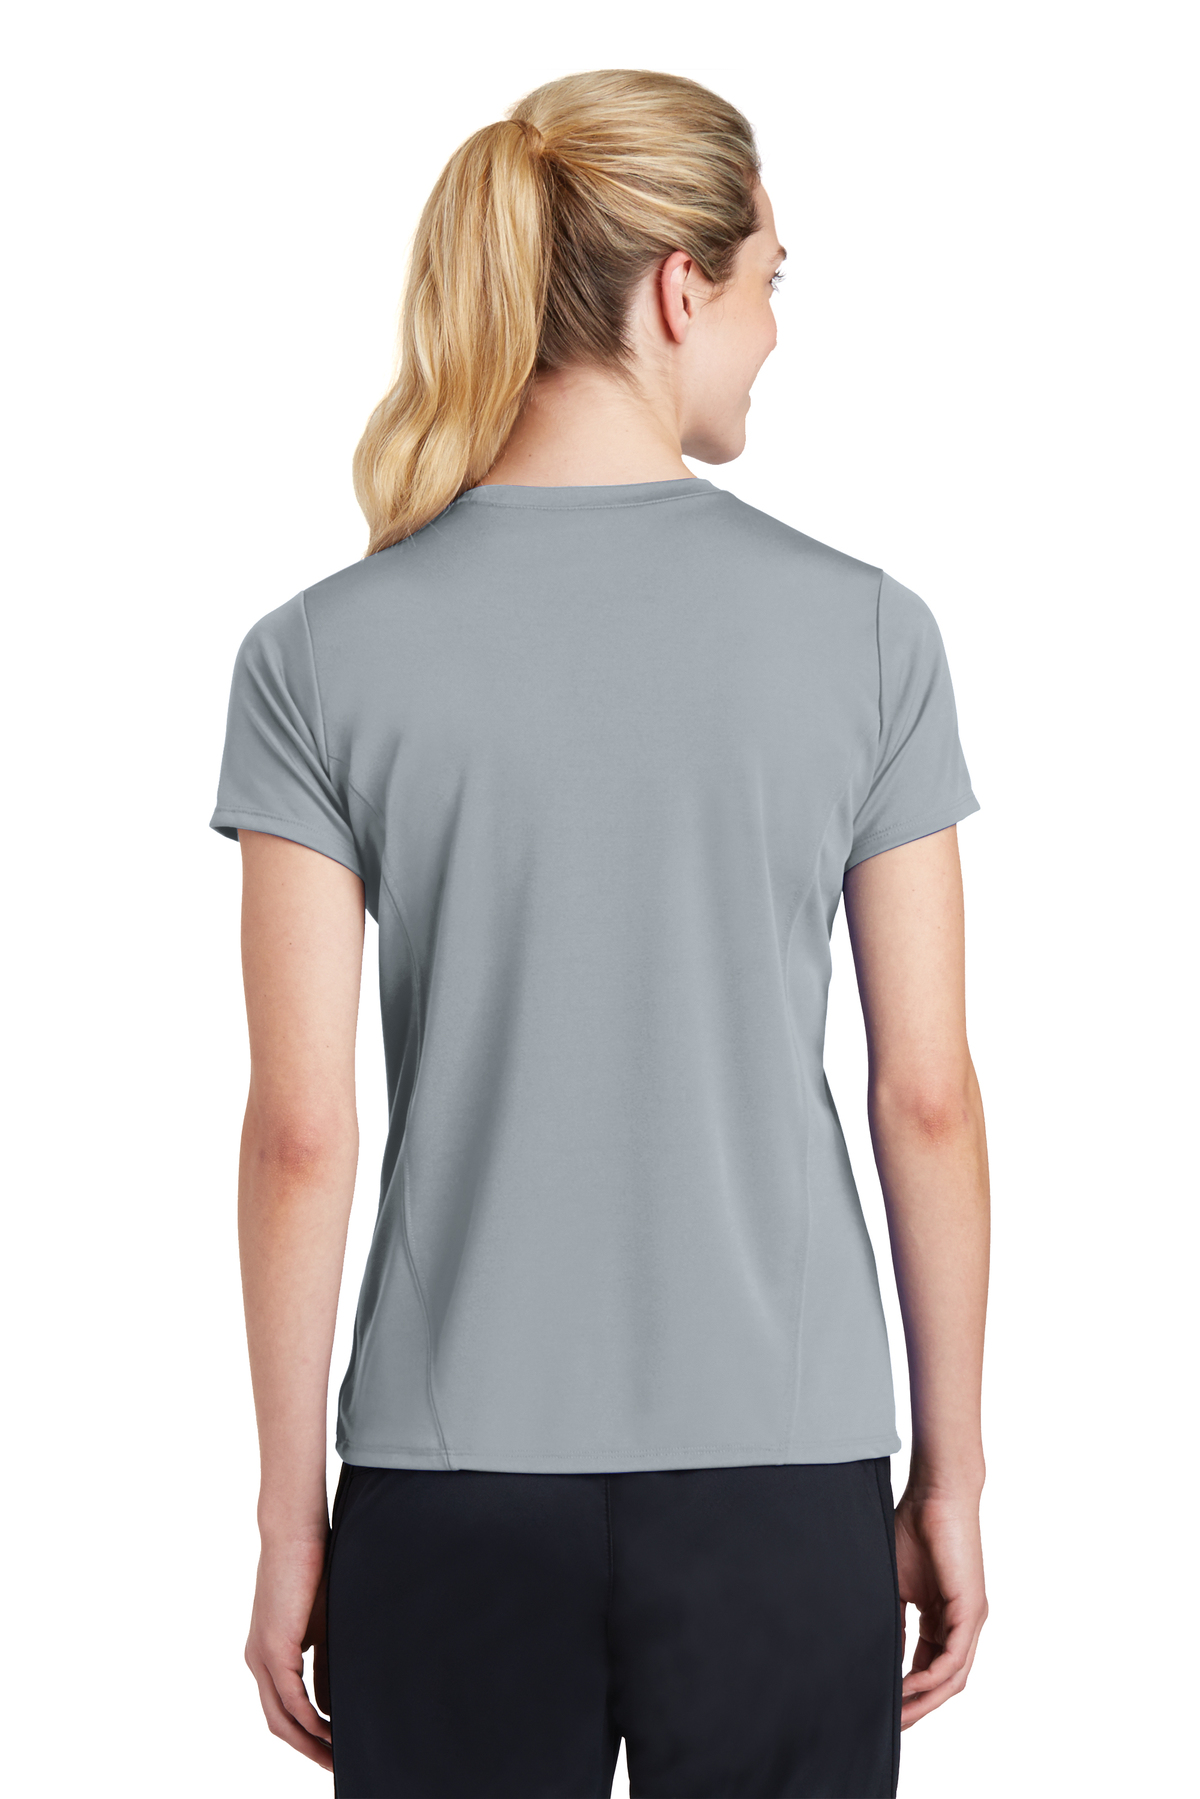 176+ Womens T-Shirt Back View for Branding